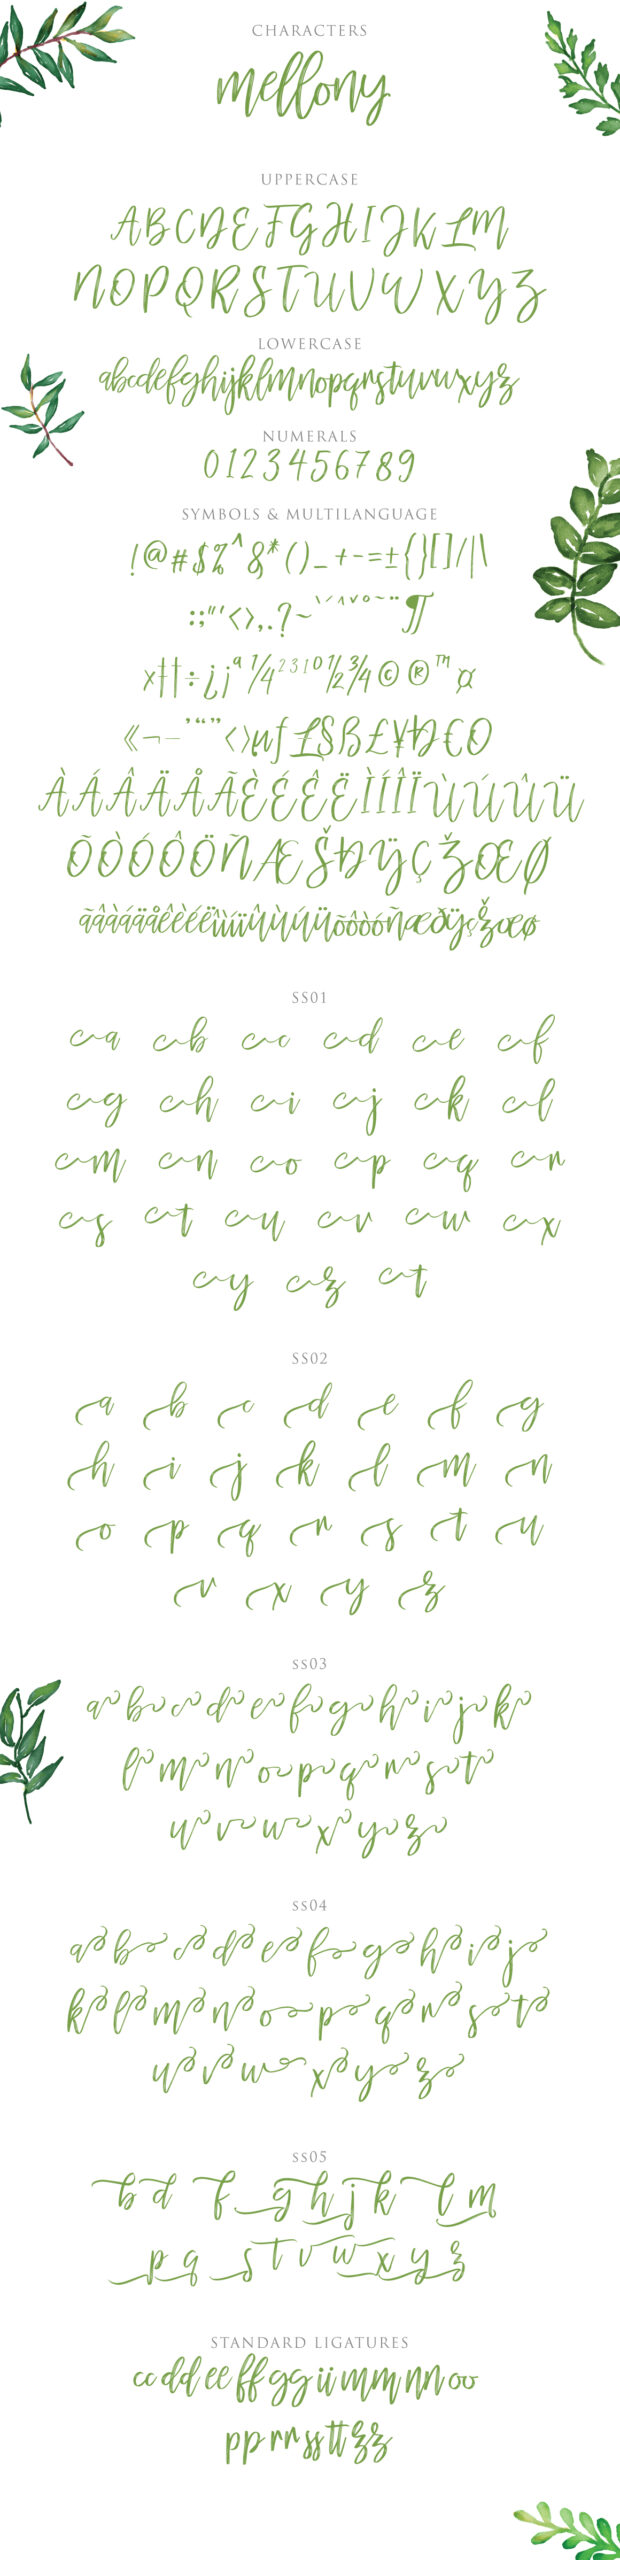 mellony brush script font